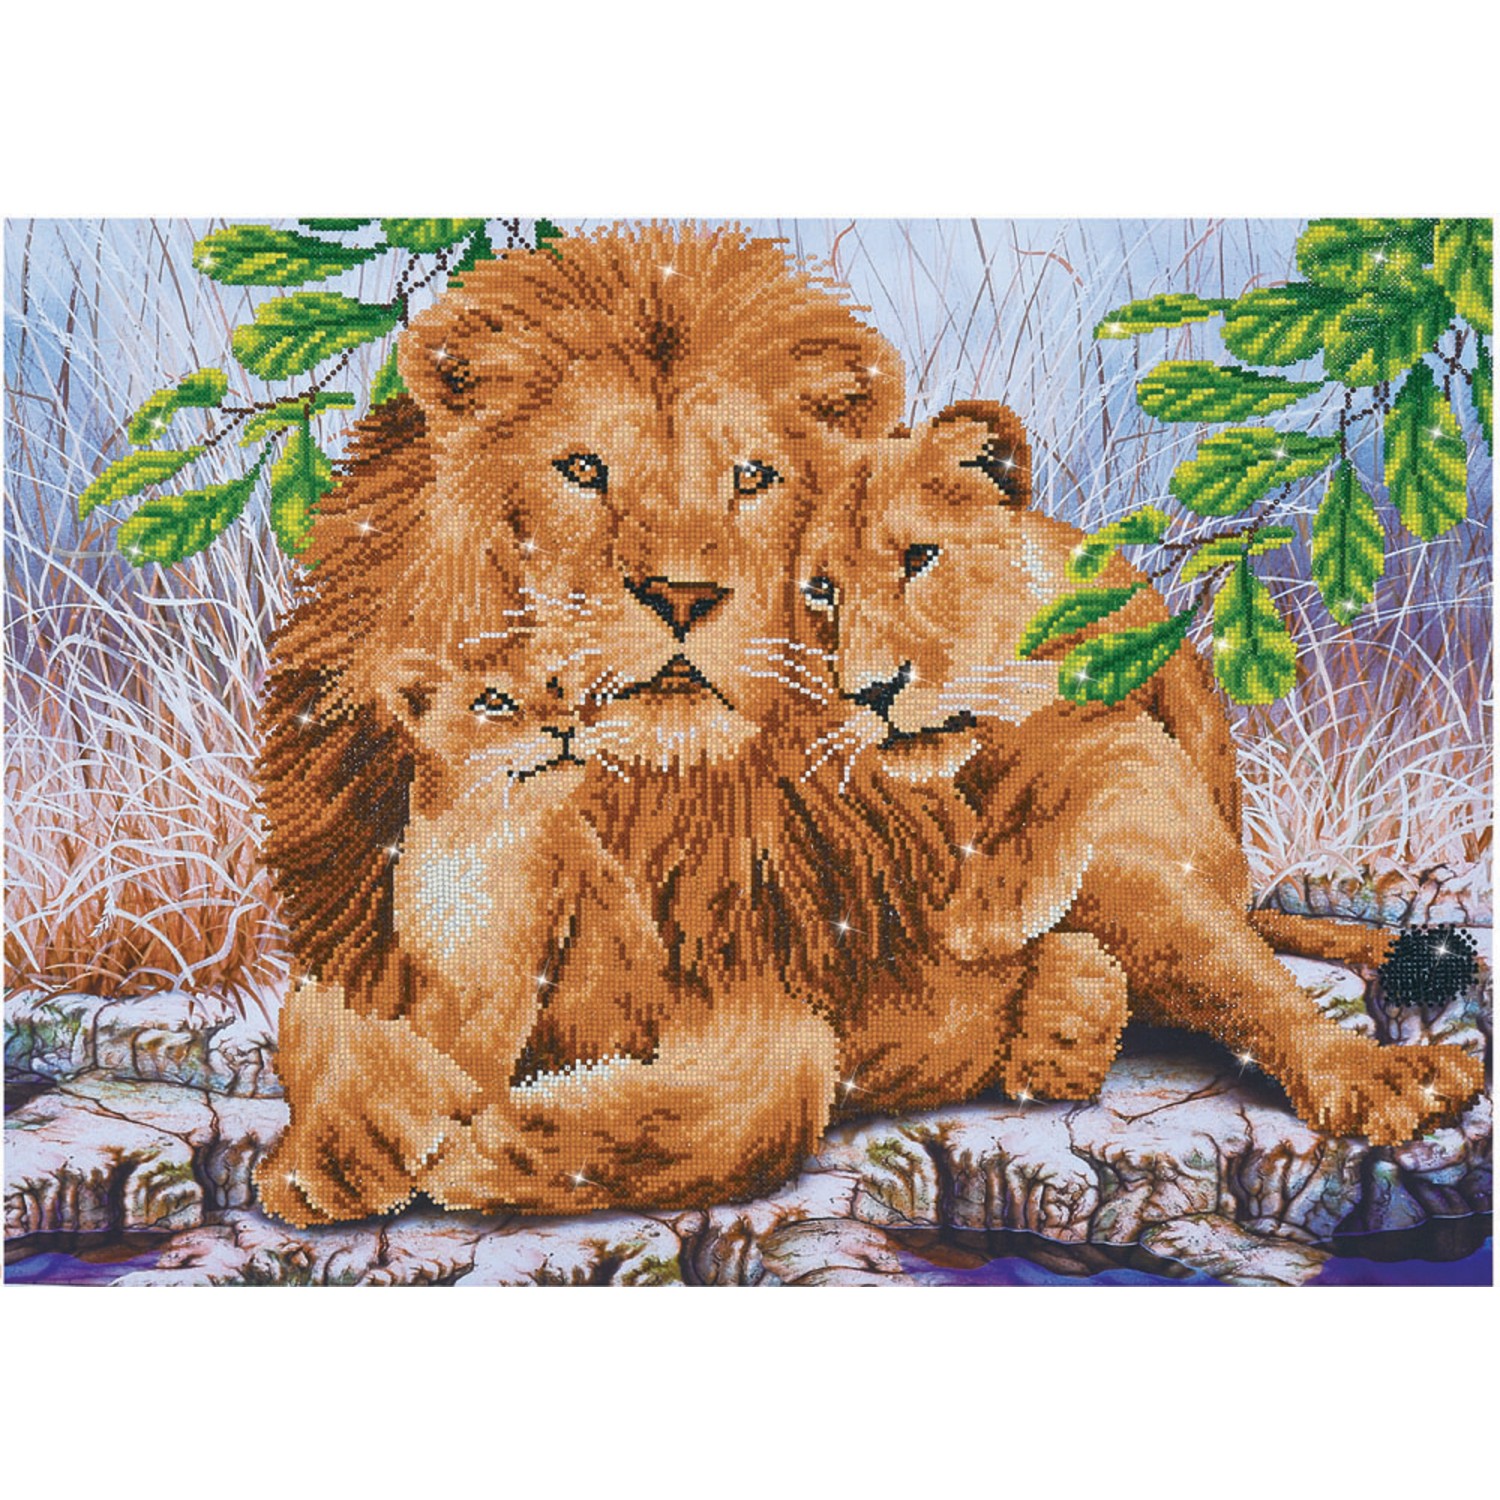 Lion Family Animals Diamond Painting 